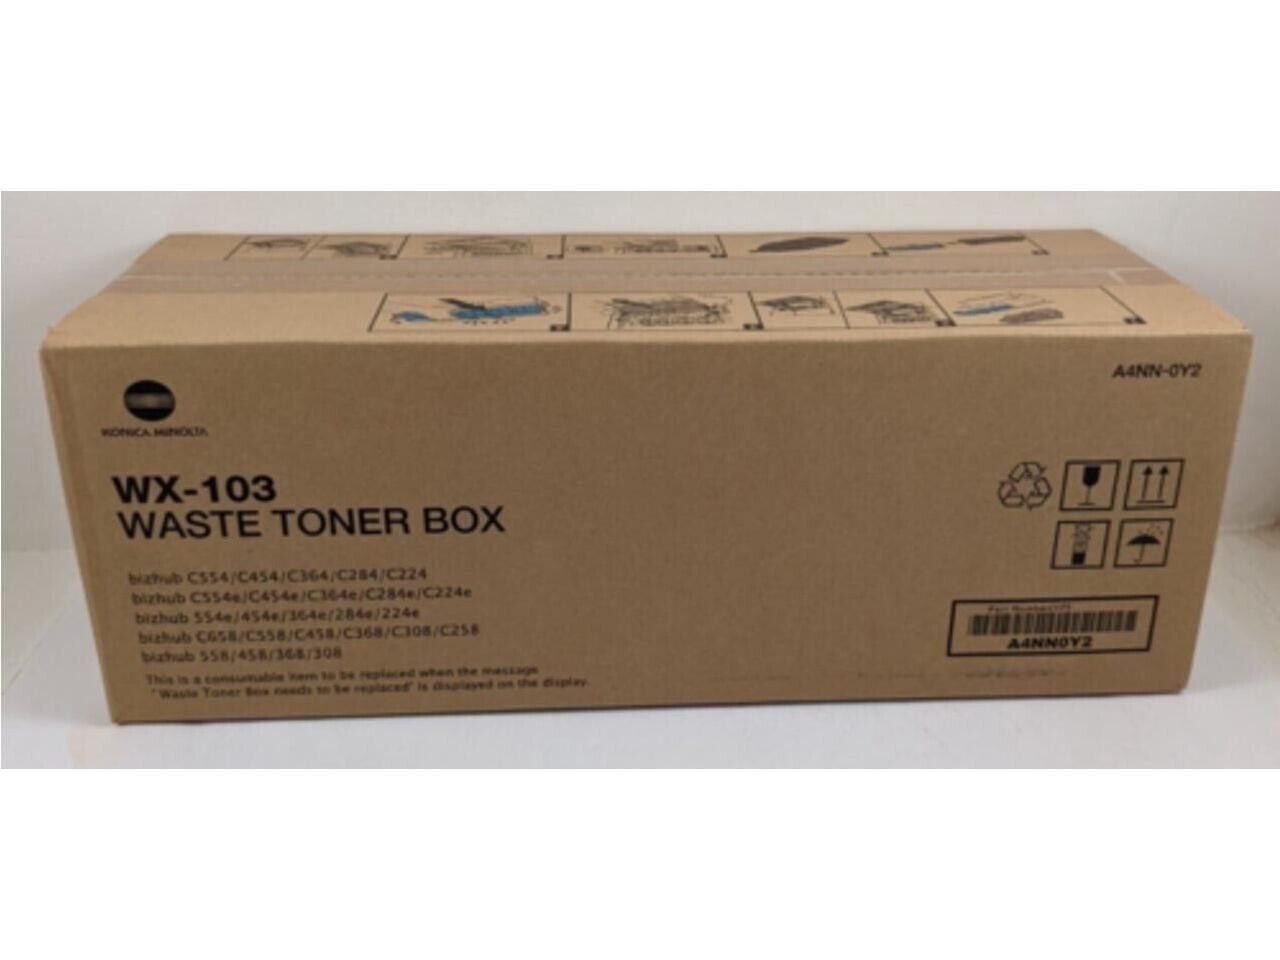 NEW Genuine Konica Minolta WX-103 Waste Toner Box